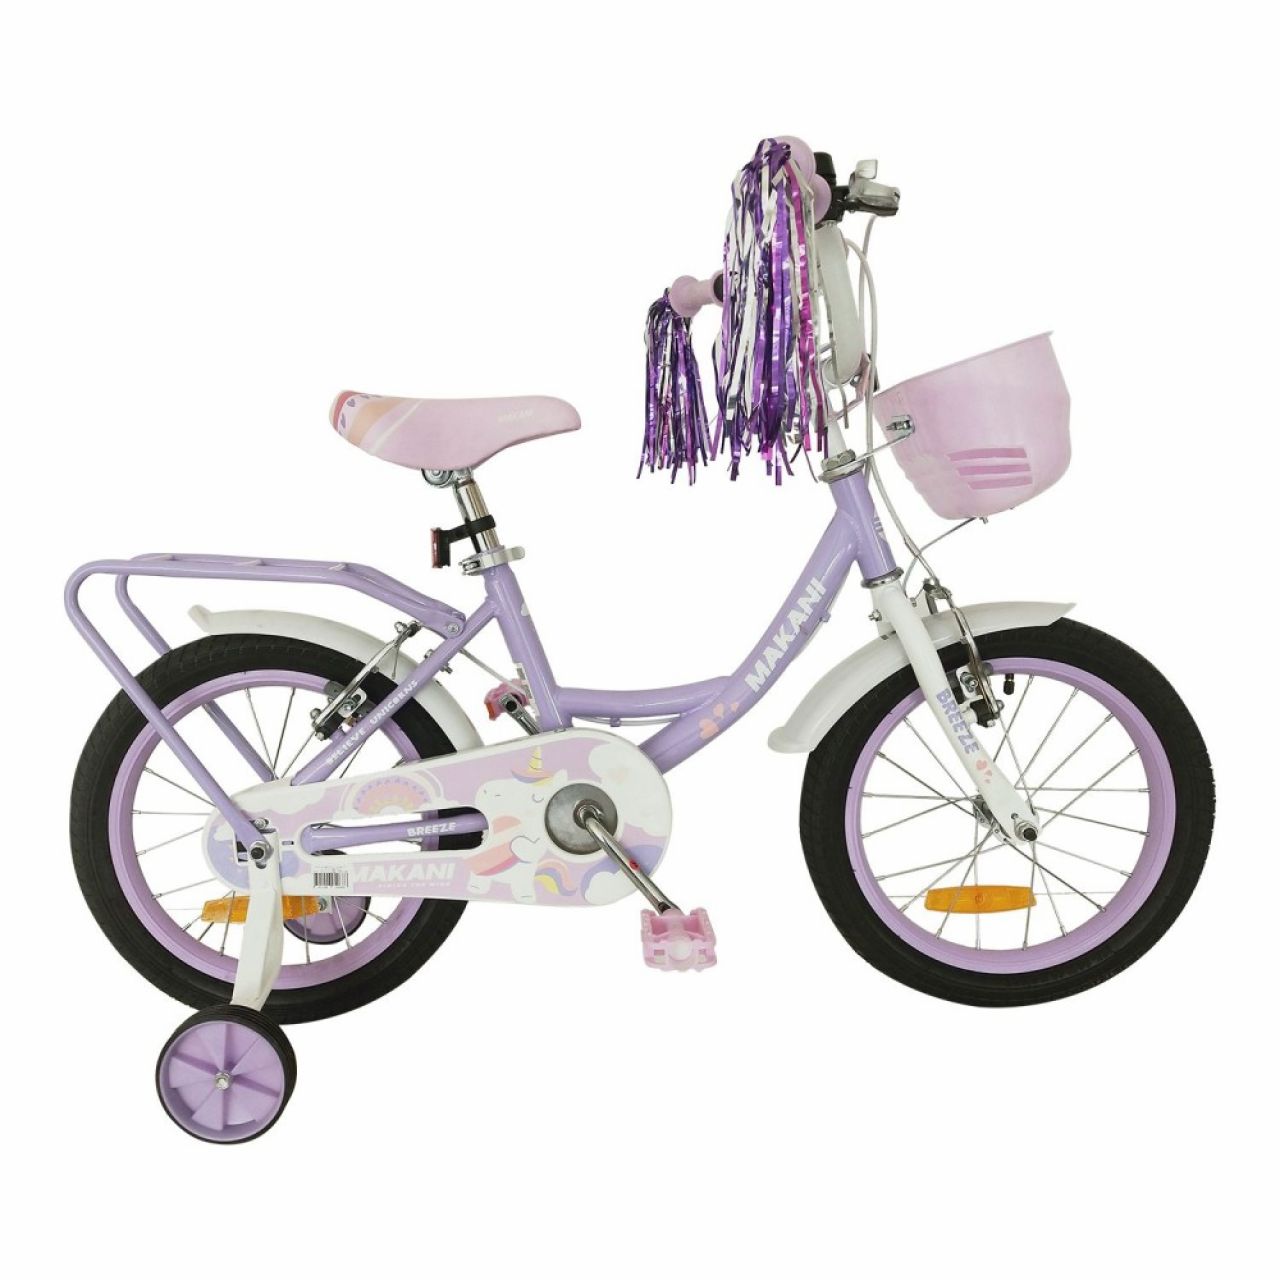 Destacada Bicicleta infantil Makani Breeze 16"